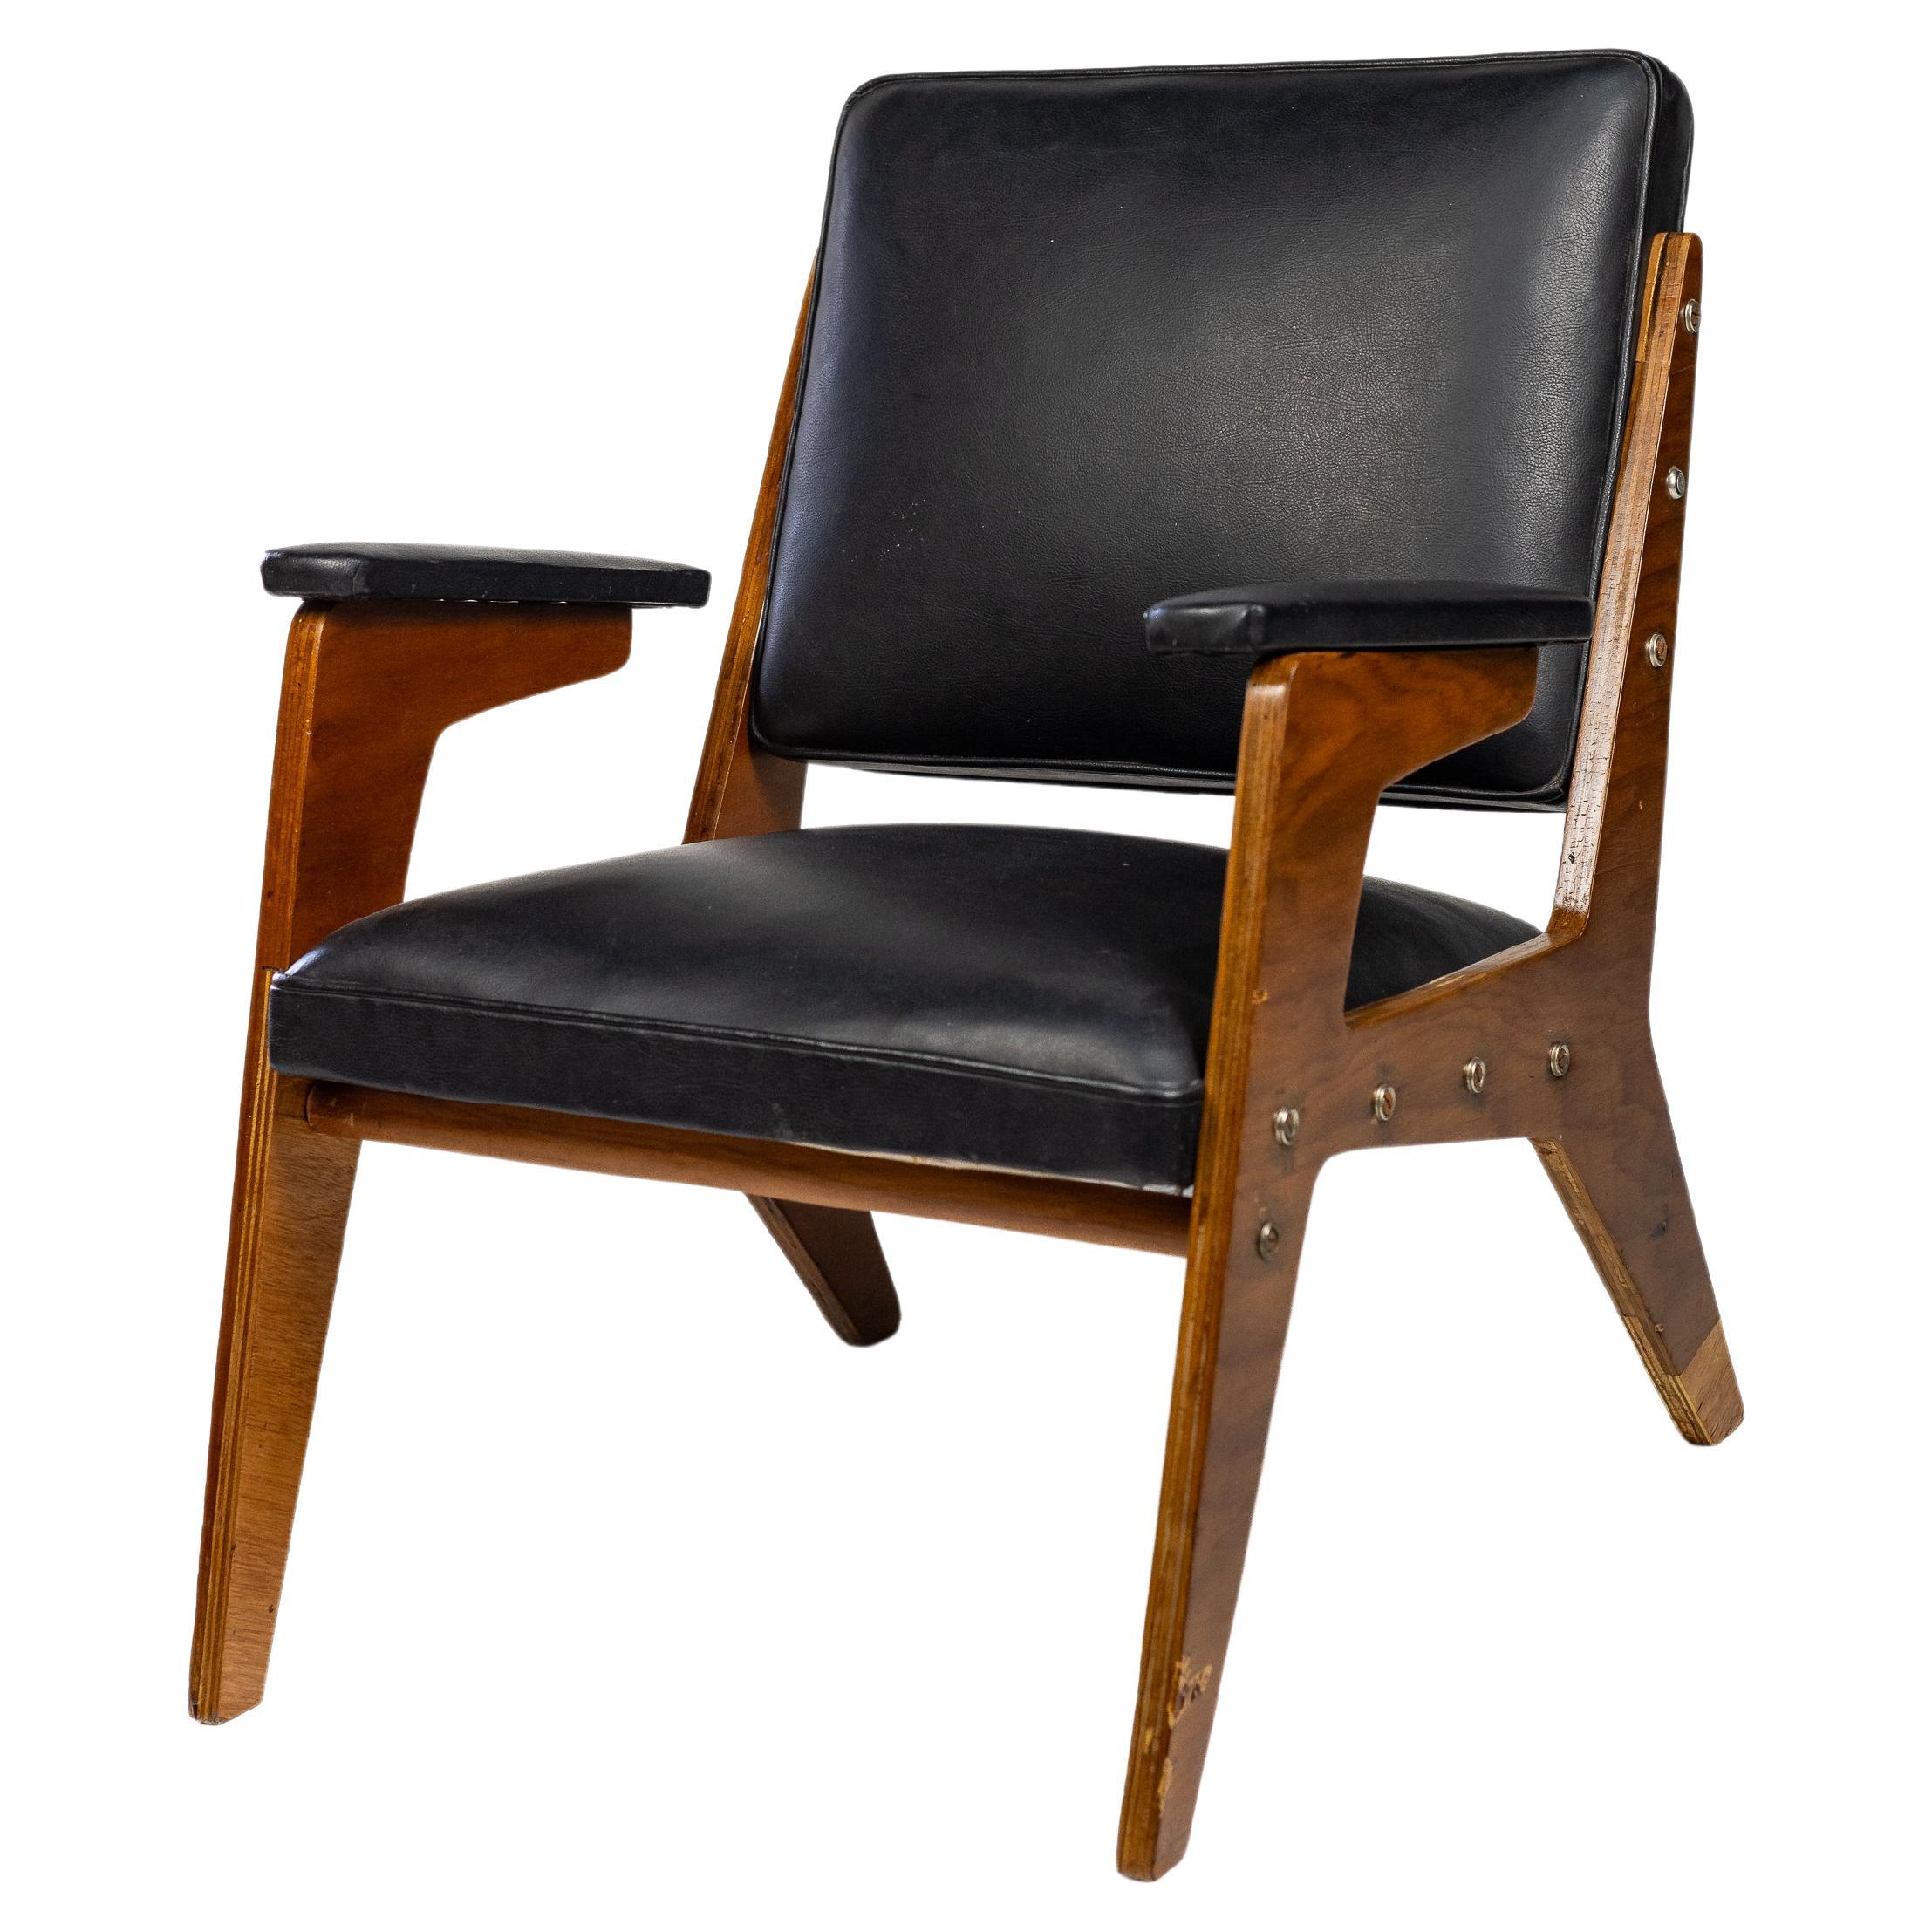 José Zanine Caldas. Moveis Z armchair, c. 1950. Plywood Naval and curvin wedge. For Sale